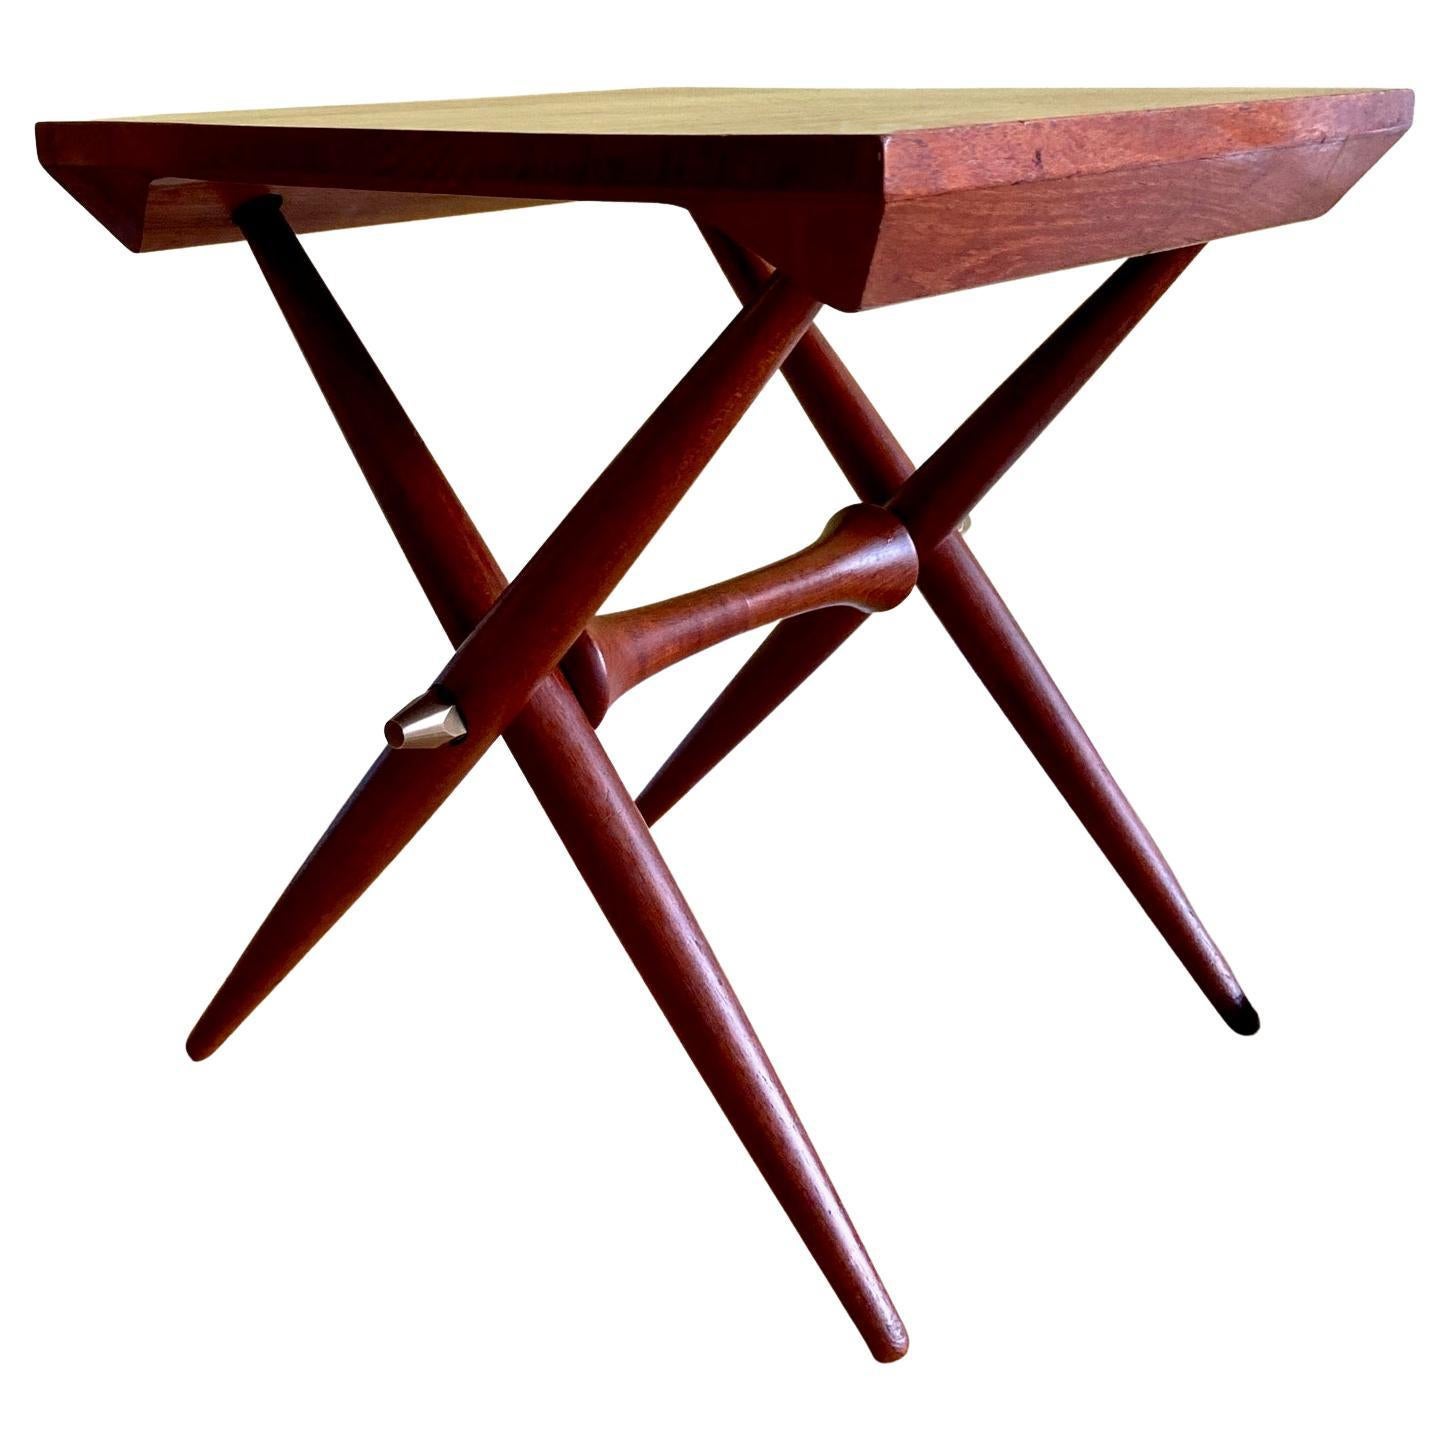 Midcentury Danish small teak table, 1960's, Dansk, attributed to Jens Quistgaard